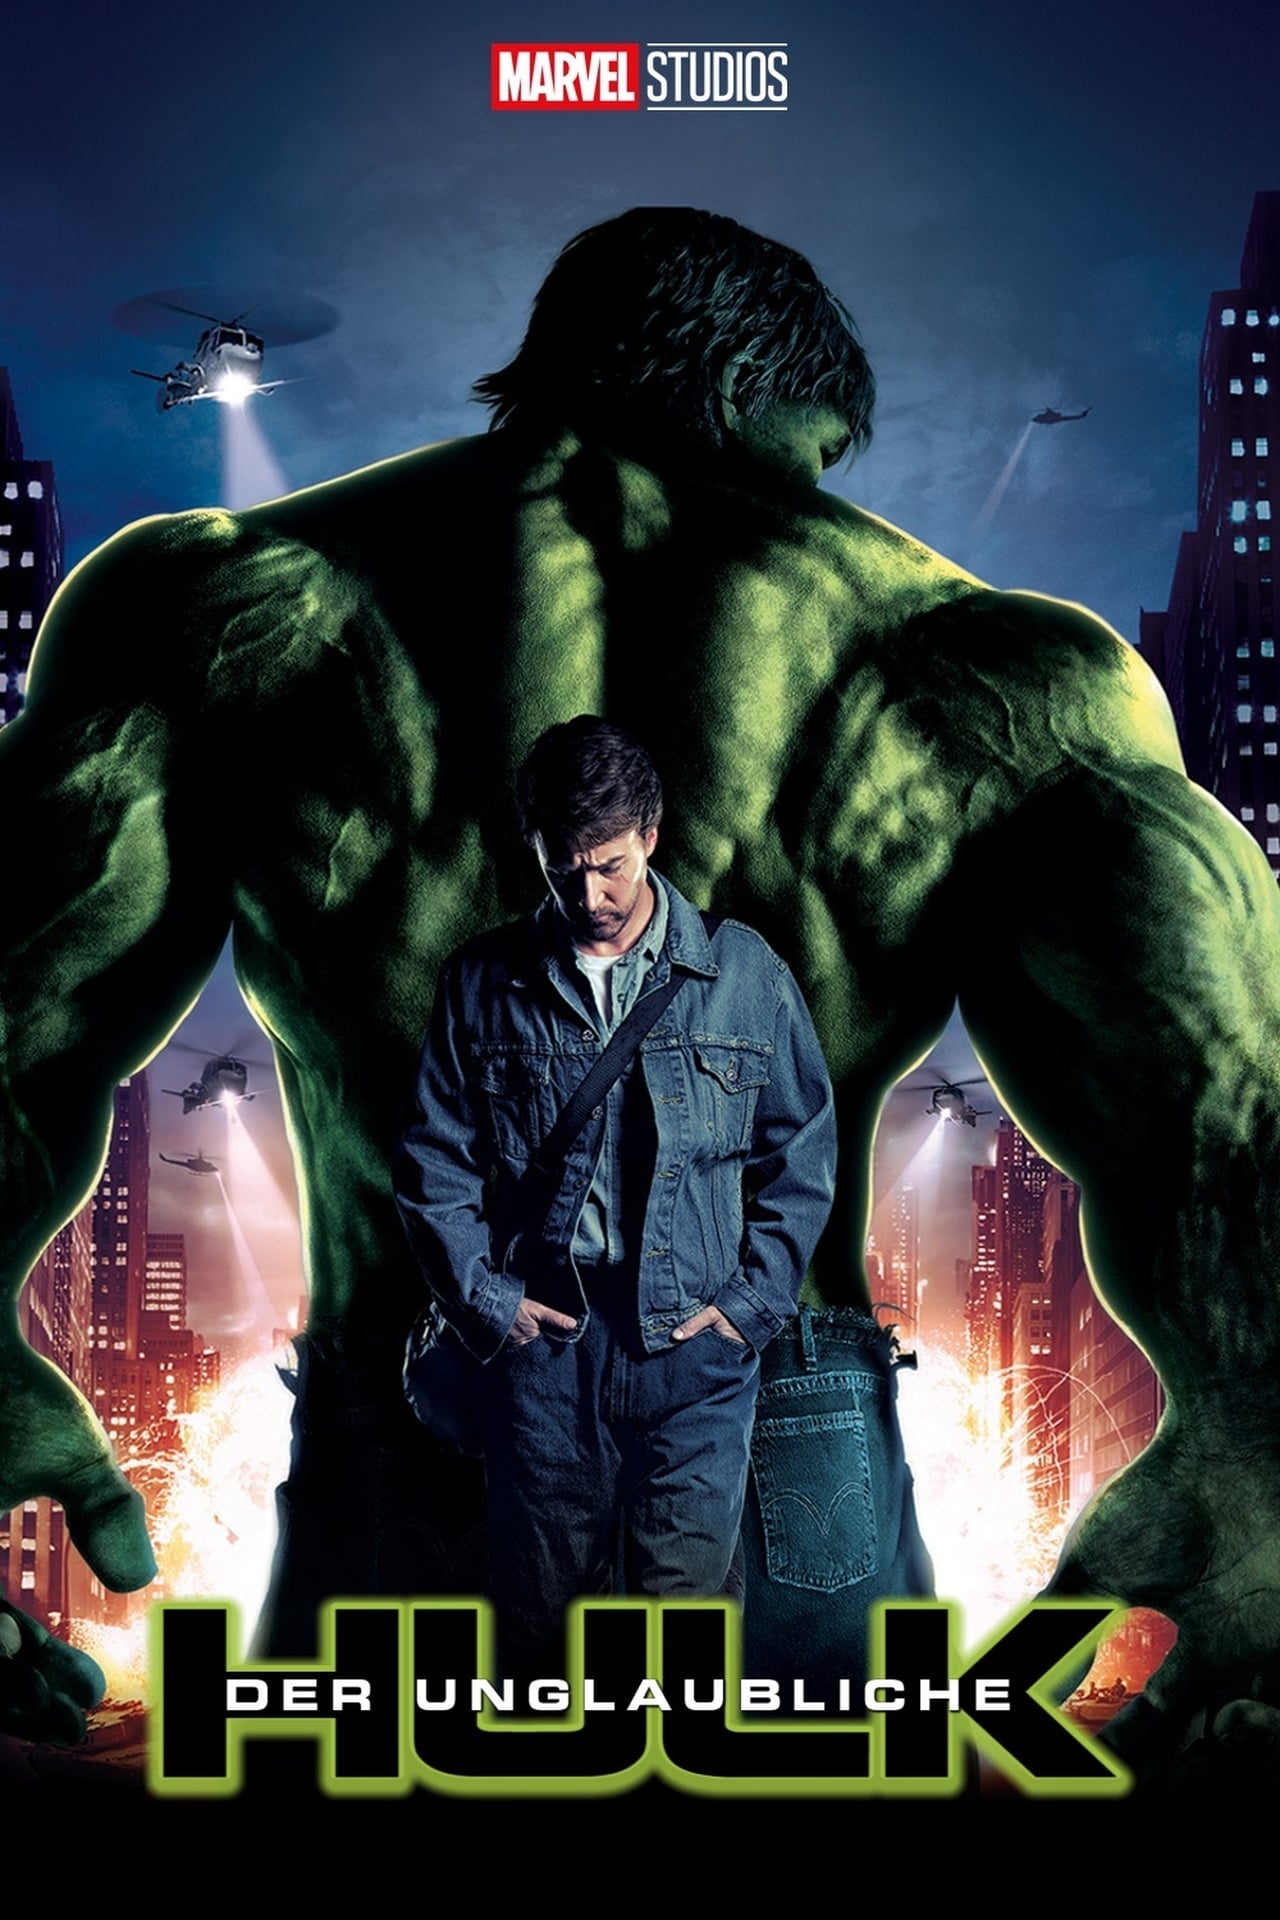 Free Watch The Incredible Hulk (2008) Full Length Movie at now - Where Can I Watch The Incredible Hulk 2008